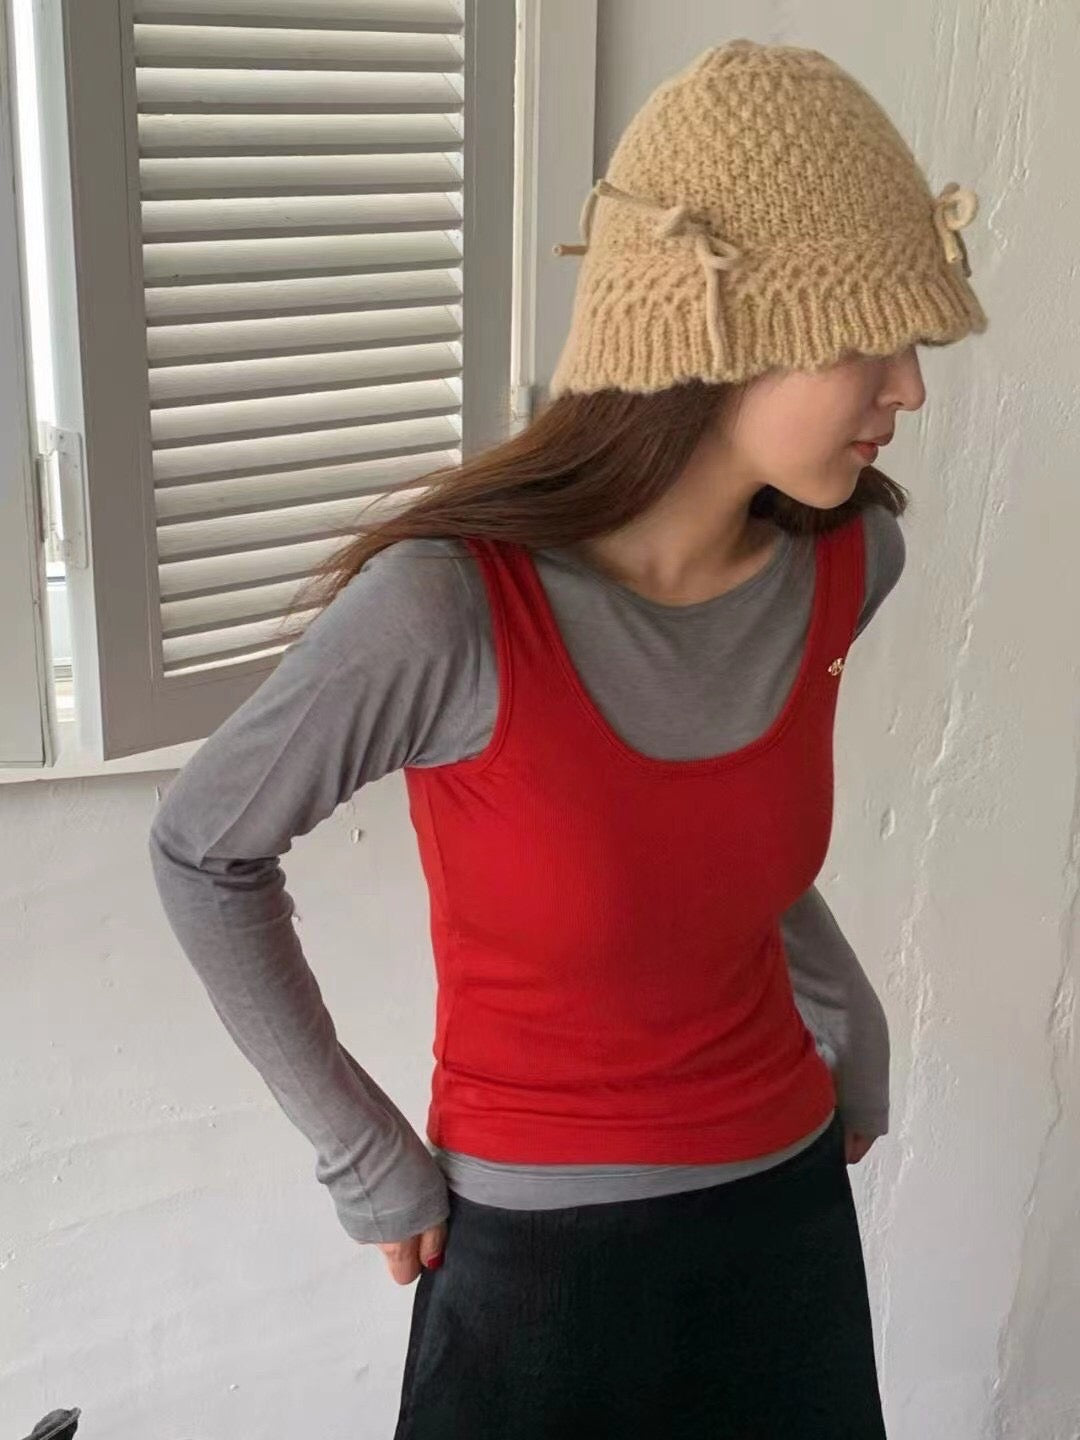 emika's select-リボンニット帽 – own it